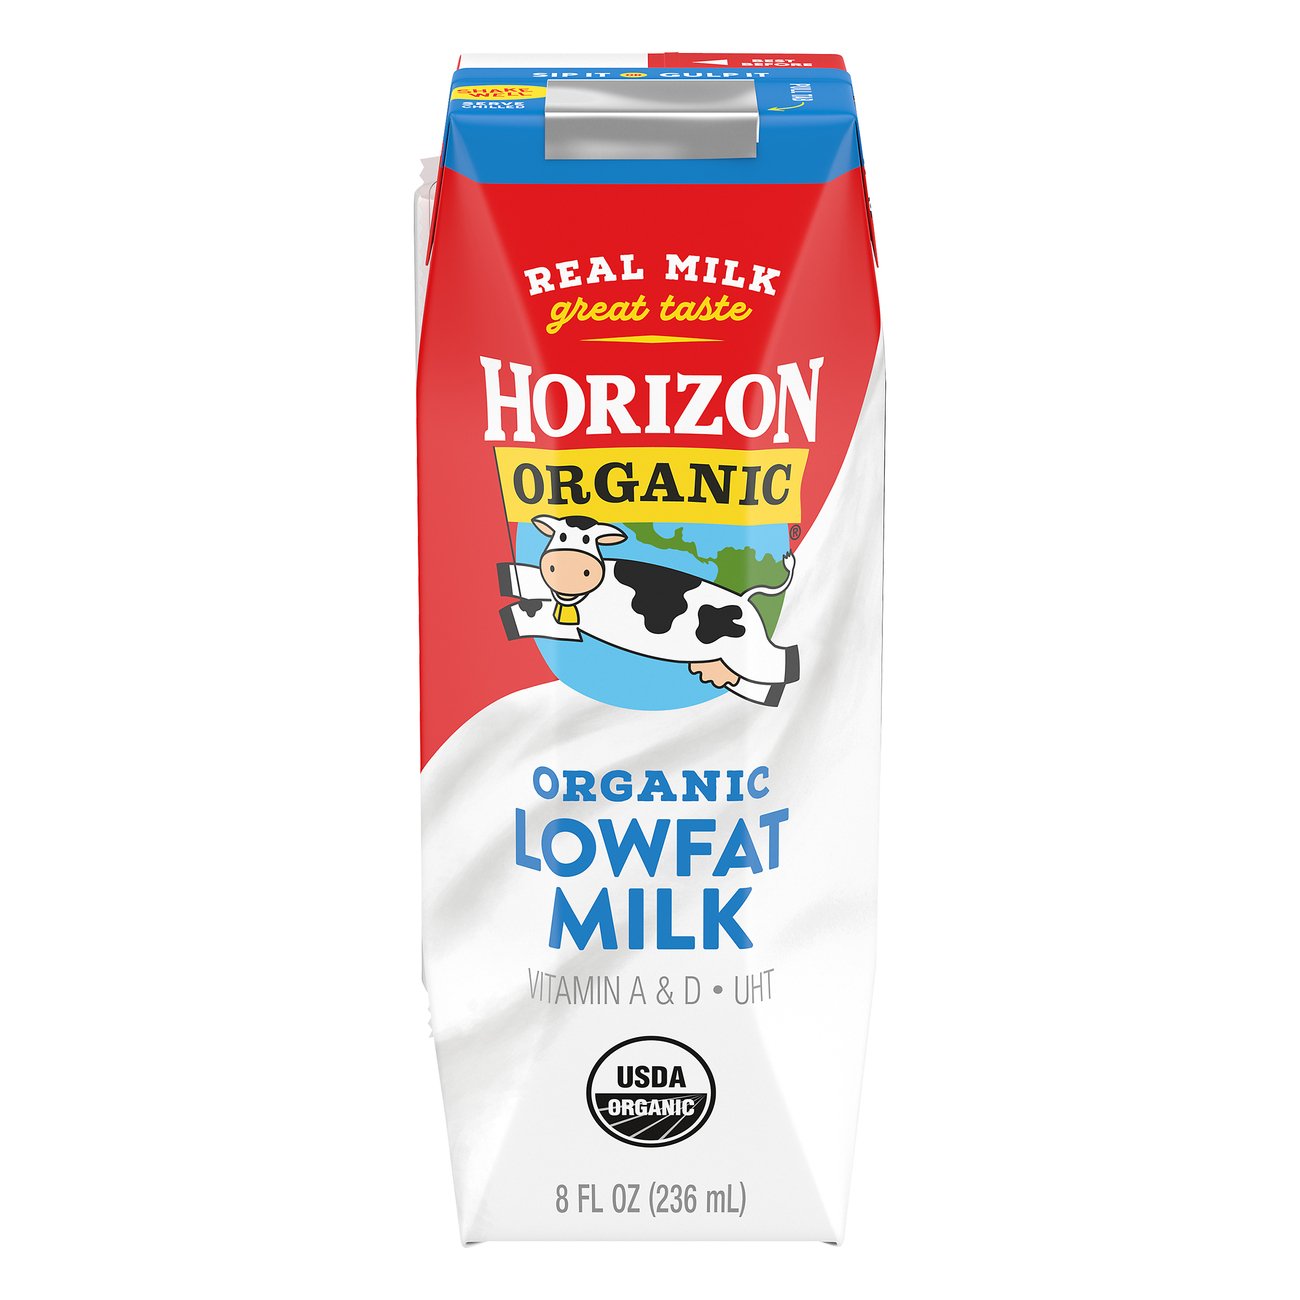 Horizon Organic 1 Lowfat Milk Shop Milk at HEB